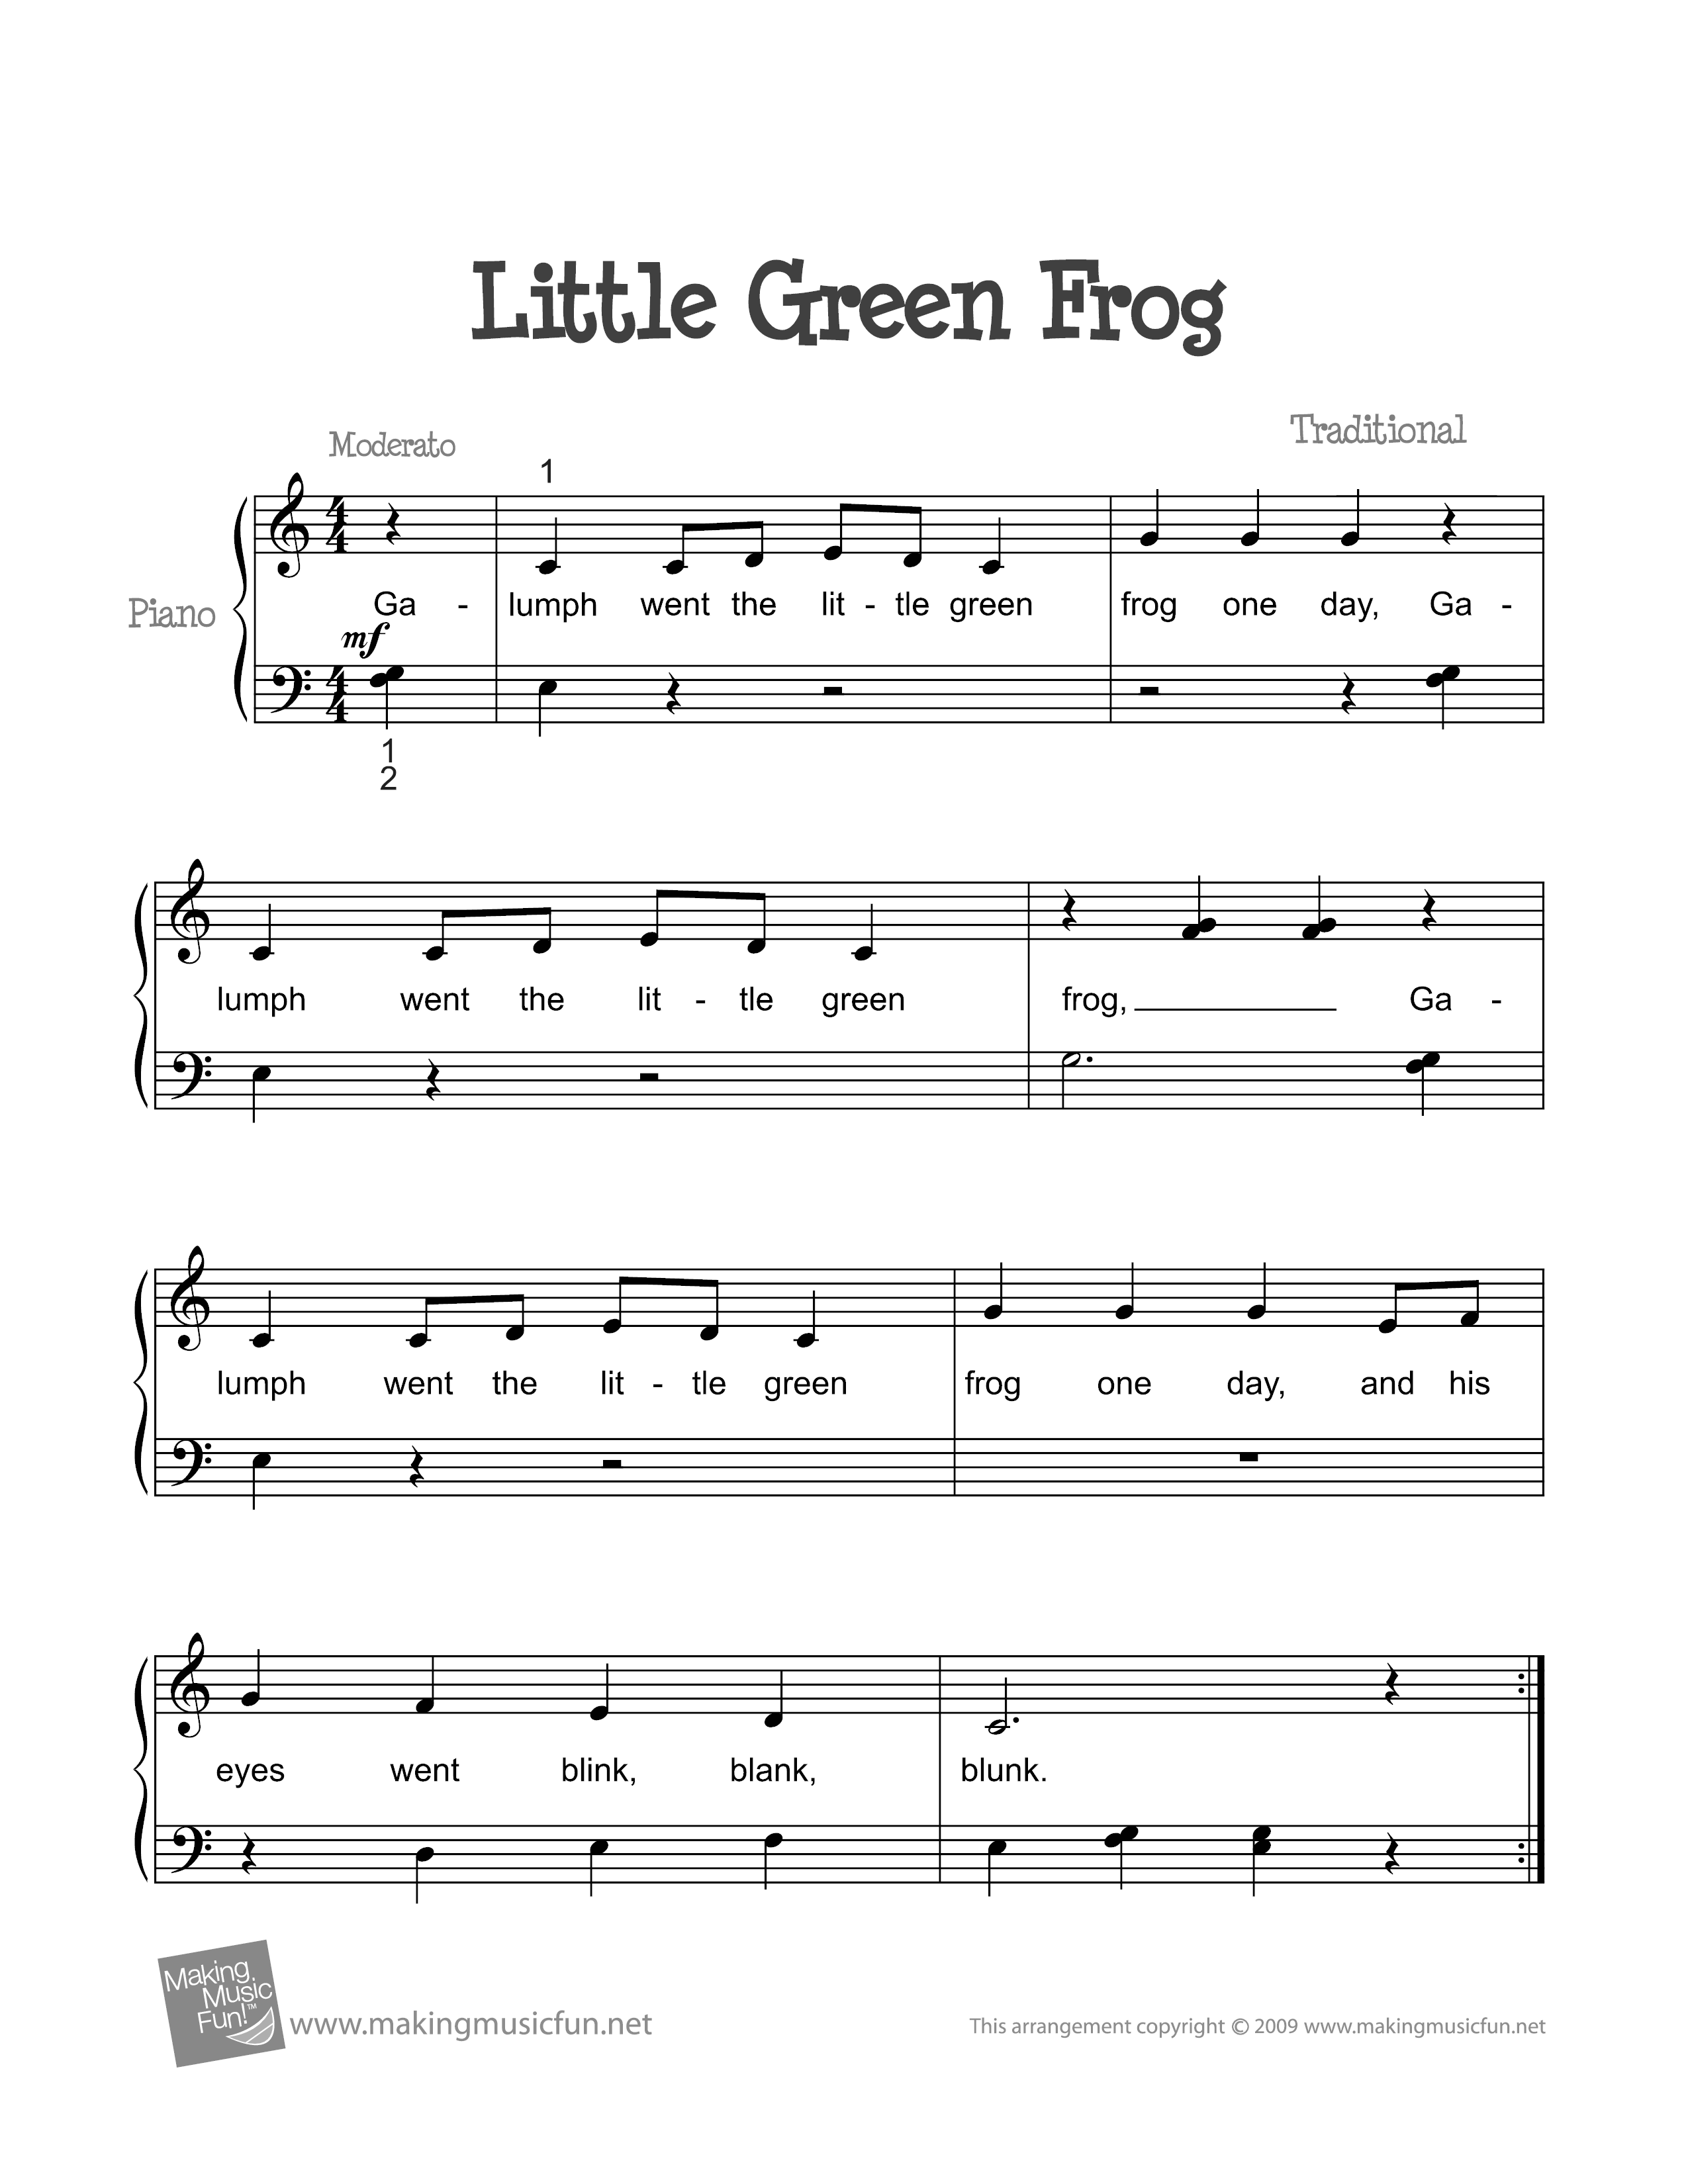 Little Green Frog (Galumph) Score